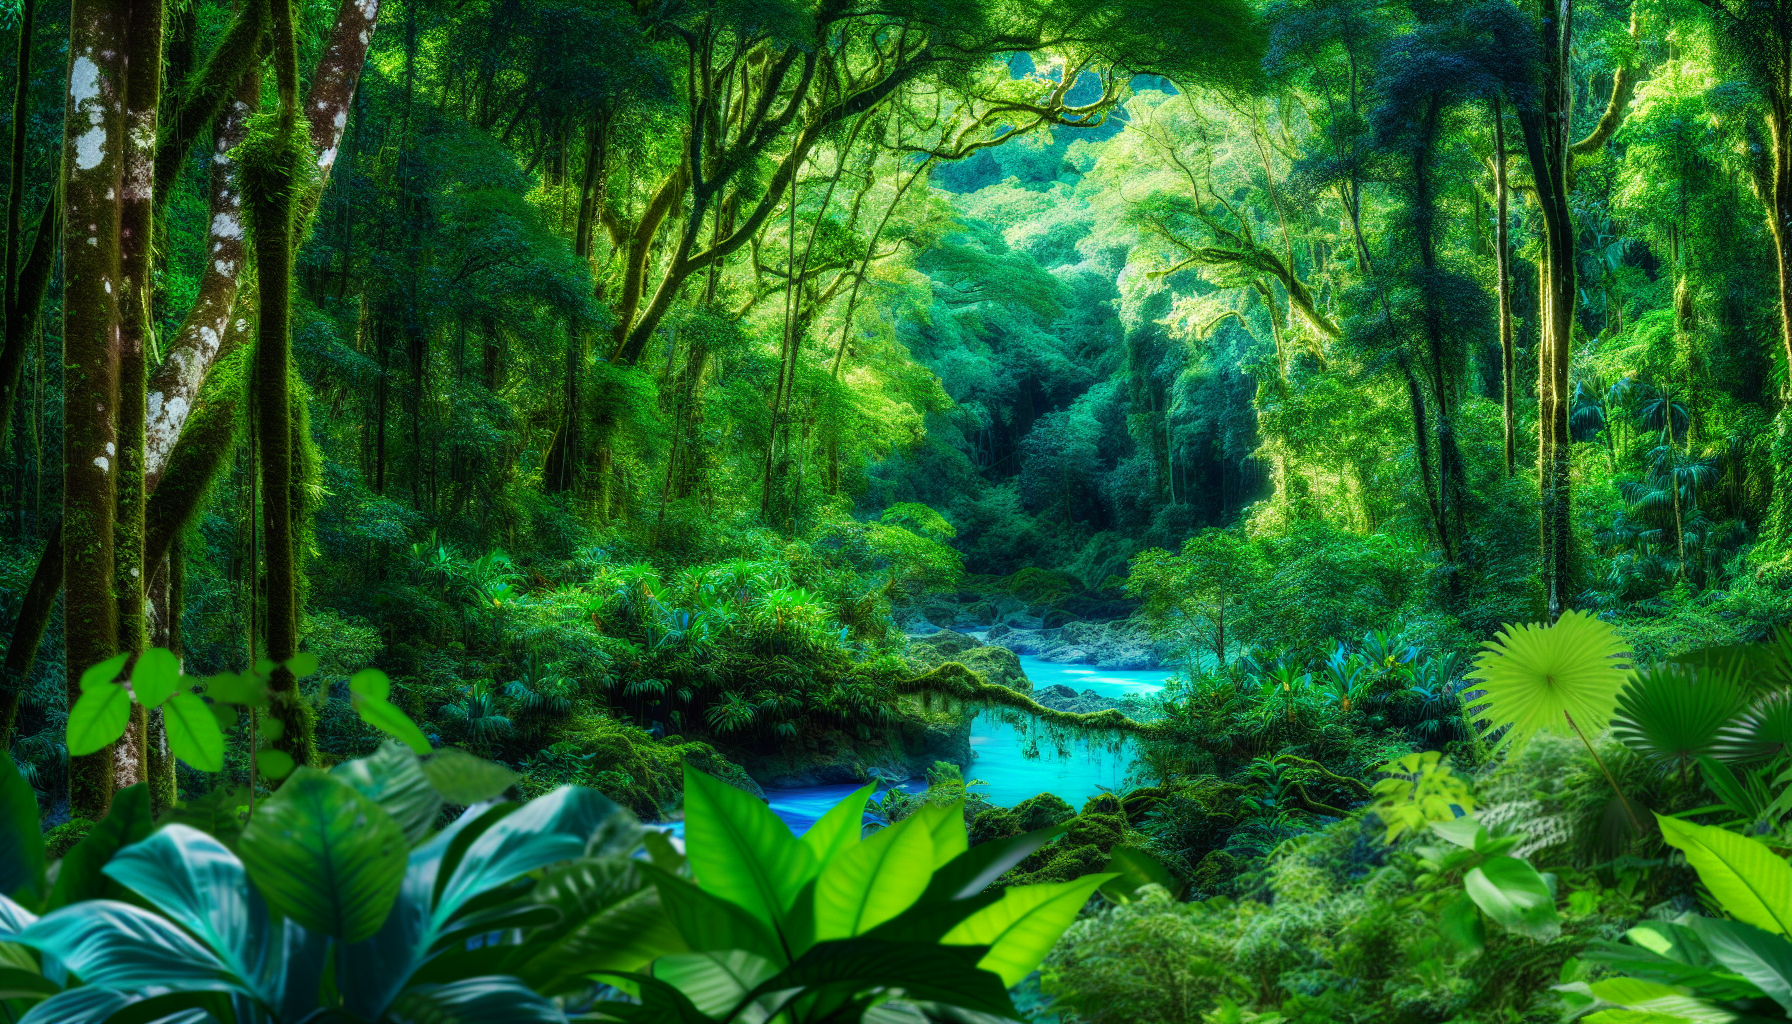 Lush rainforest with the vibrant blue Rio Celeste river flowing through it